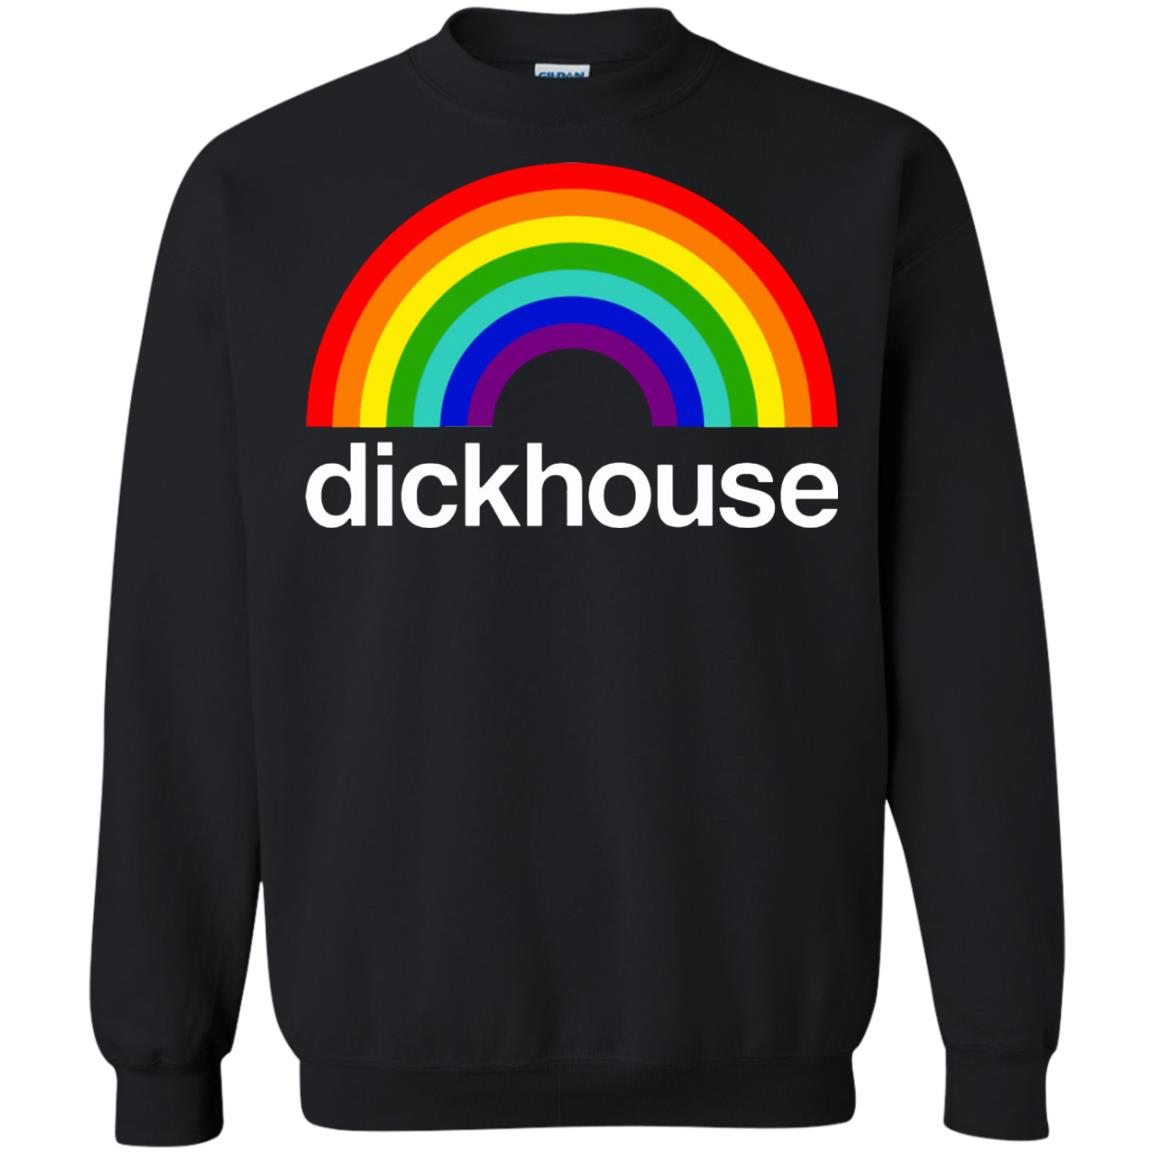 dickhouse sweatshirt - black